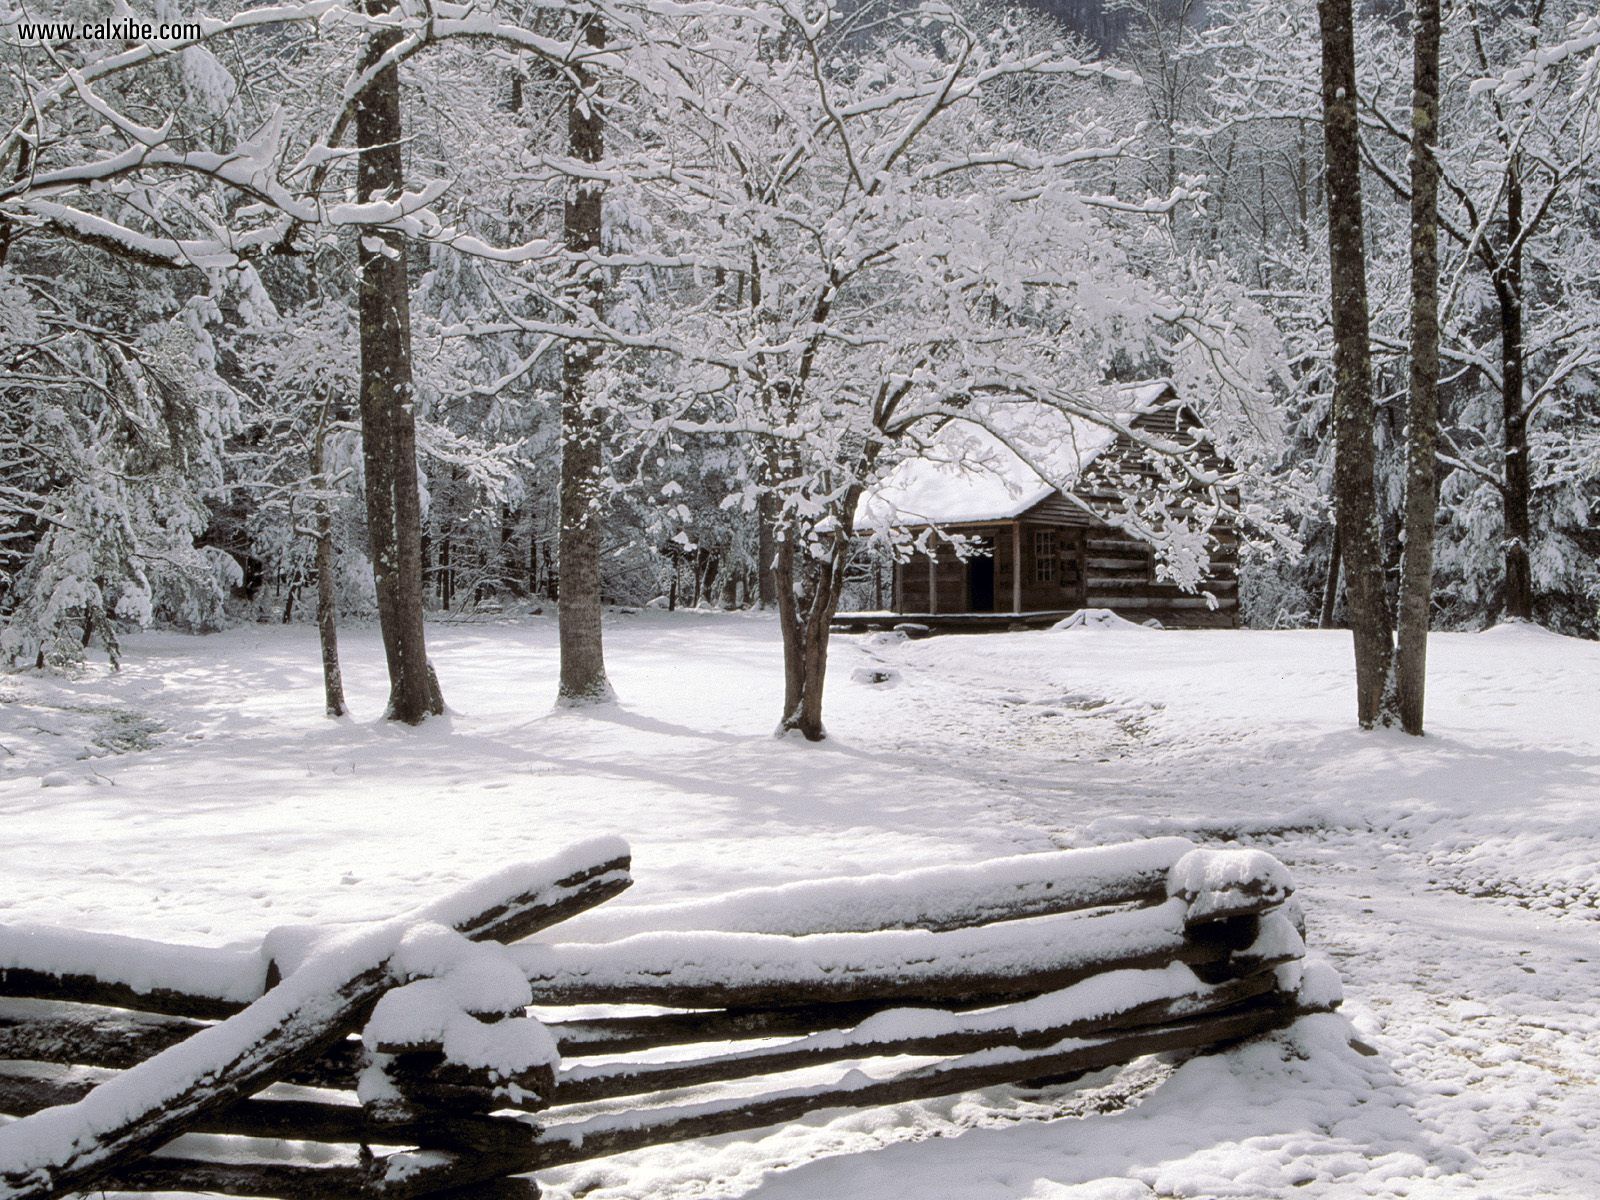 Carter Shields Cabinin Winter Great Smoky Mountains National Park